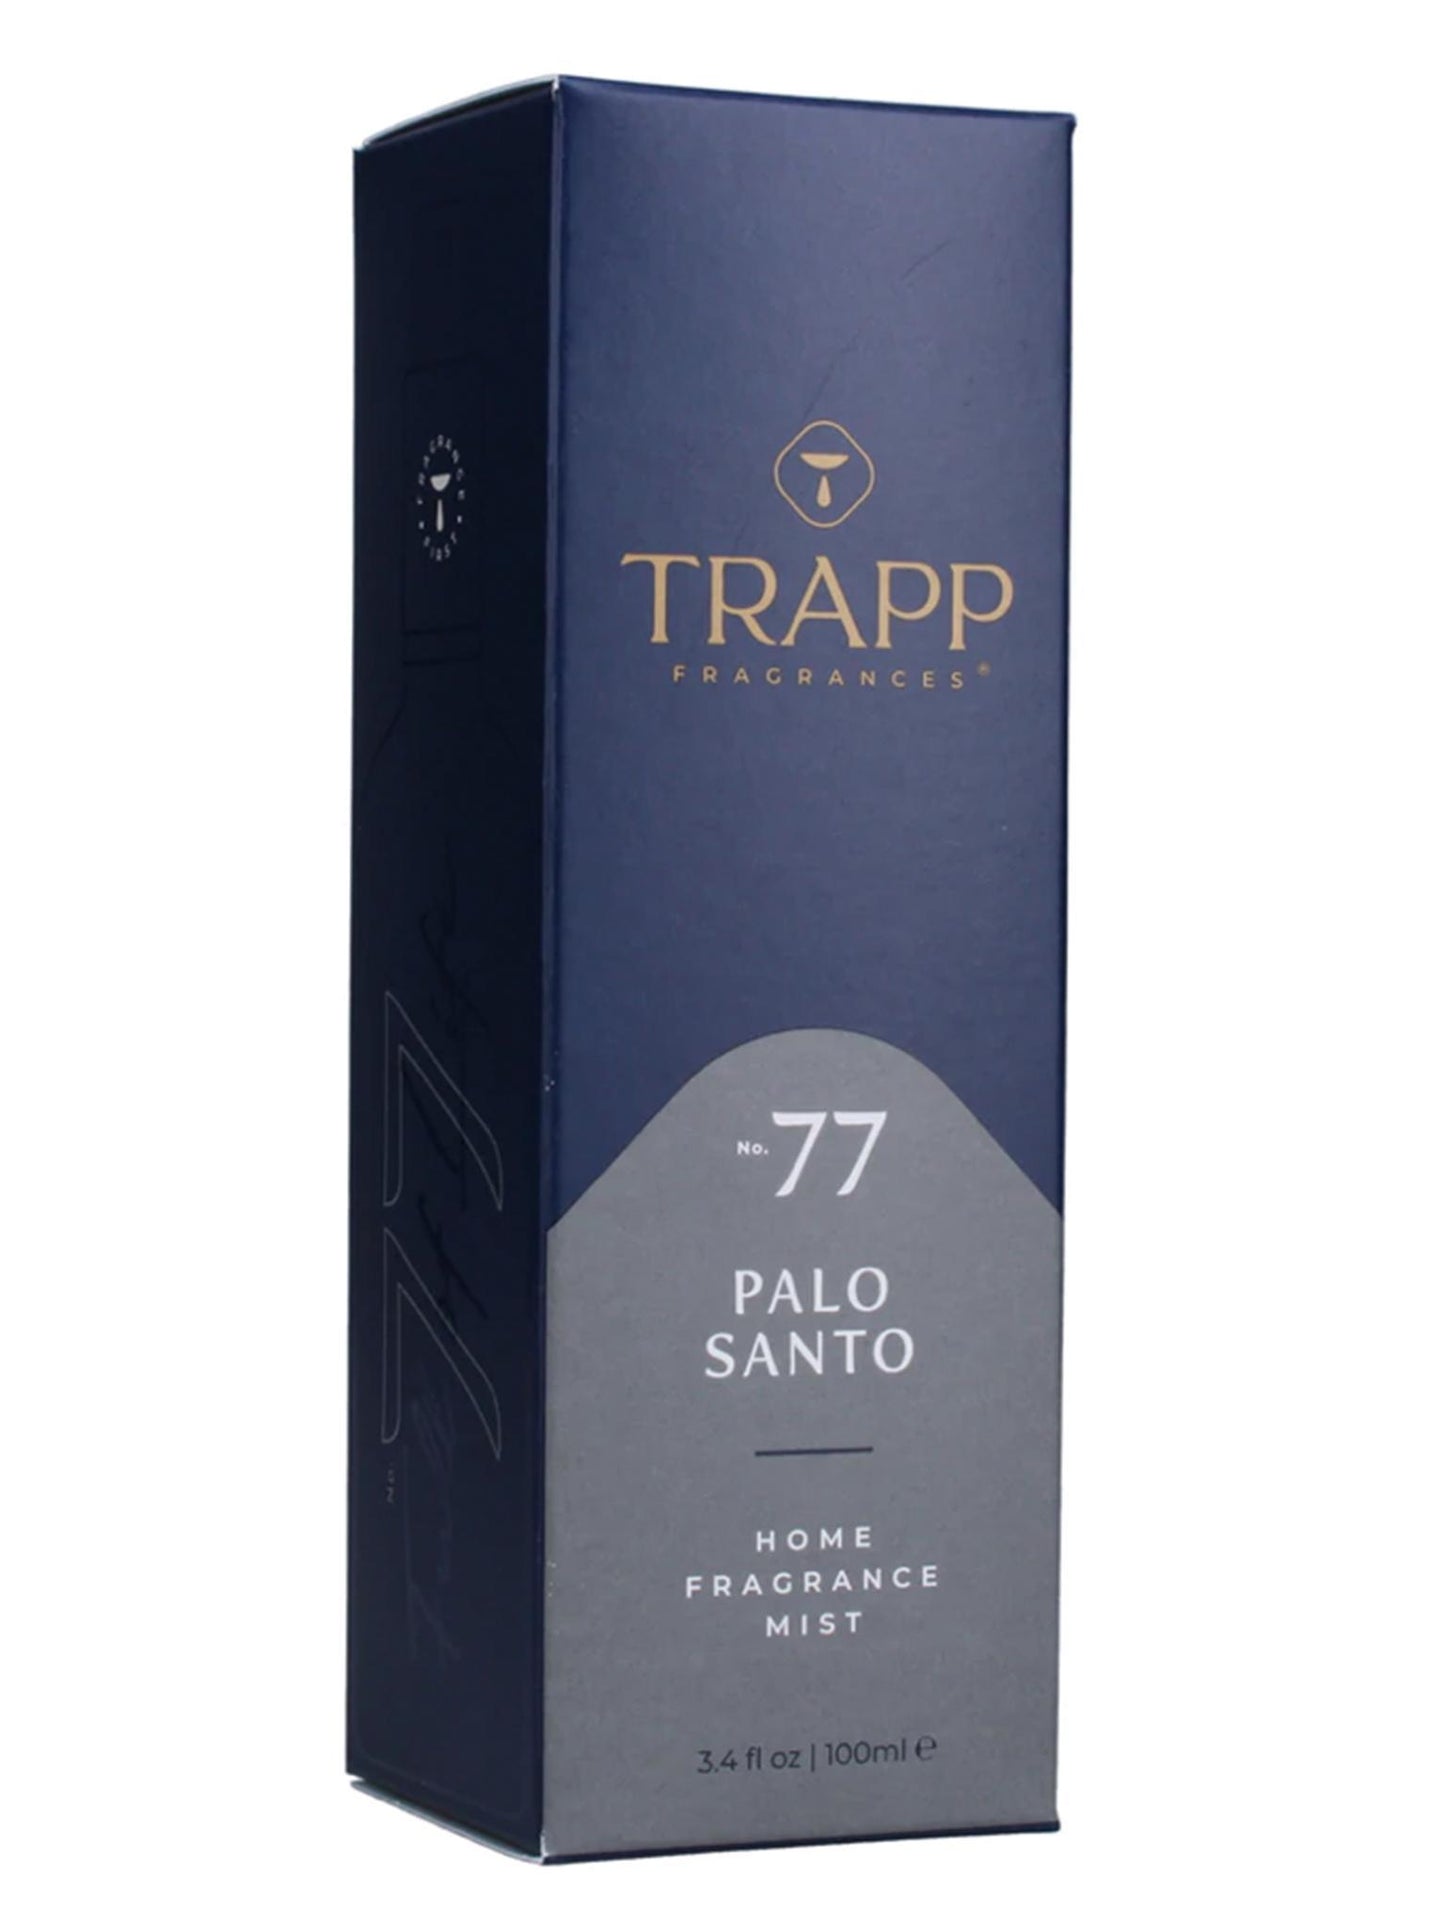 Trapp Mediterranean Fig Fragrance Mist Room Spray No. 14